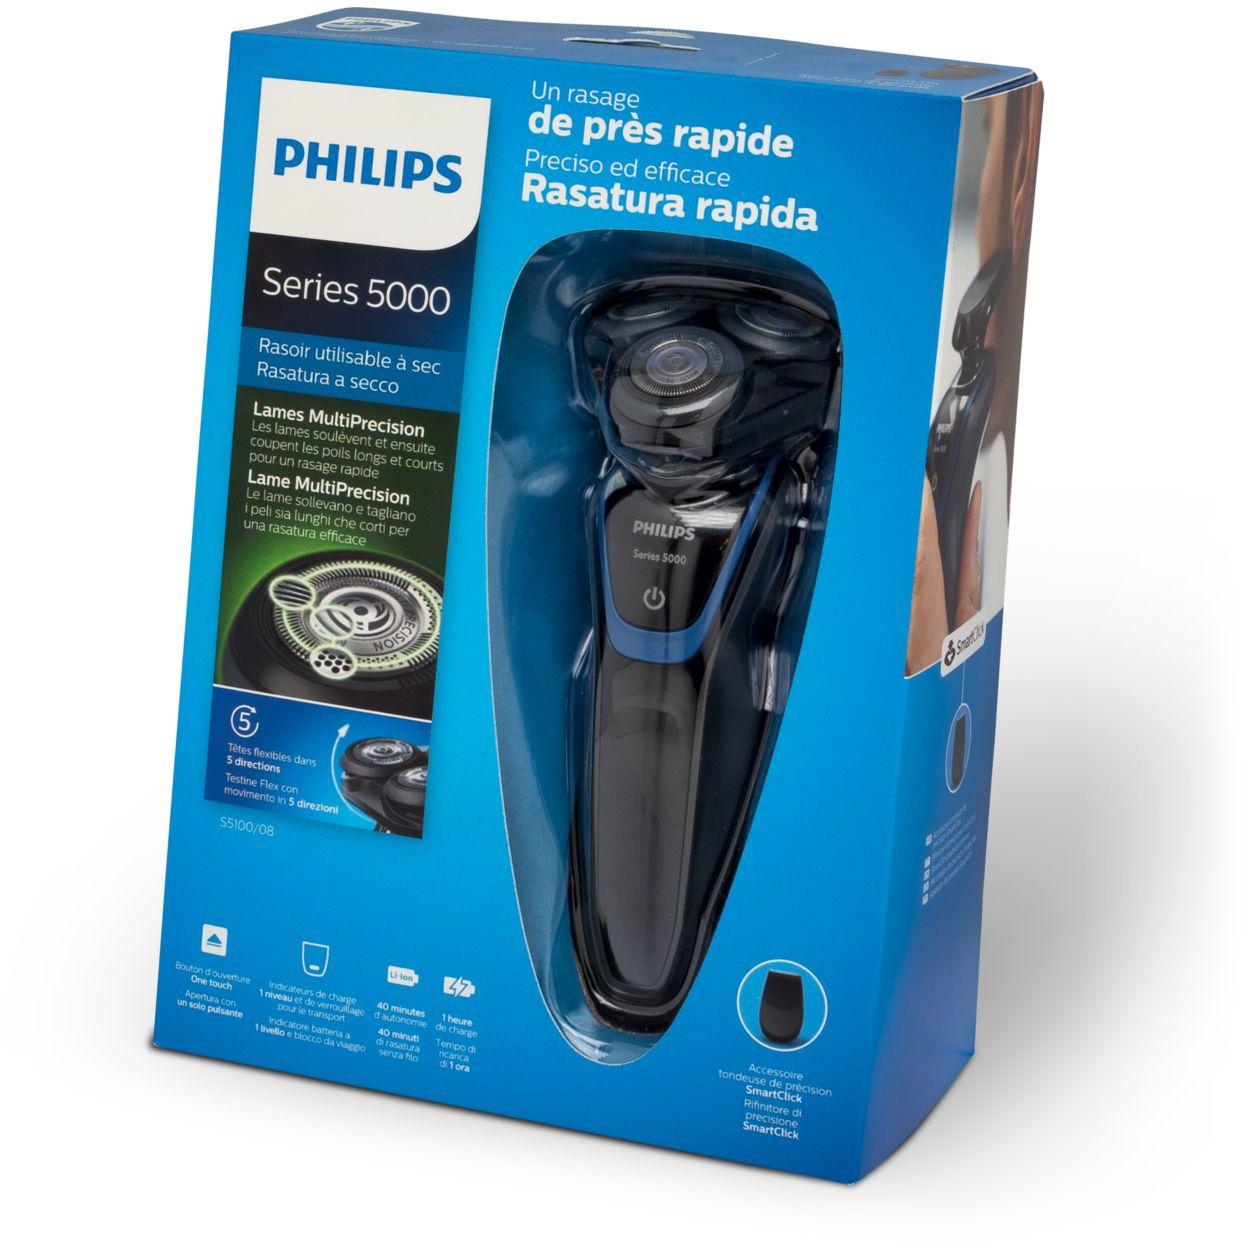 S5100 - RASOIO ELETTRICO PHILIPS SERIE 5000 S5100 - Philips